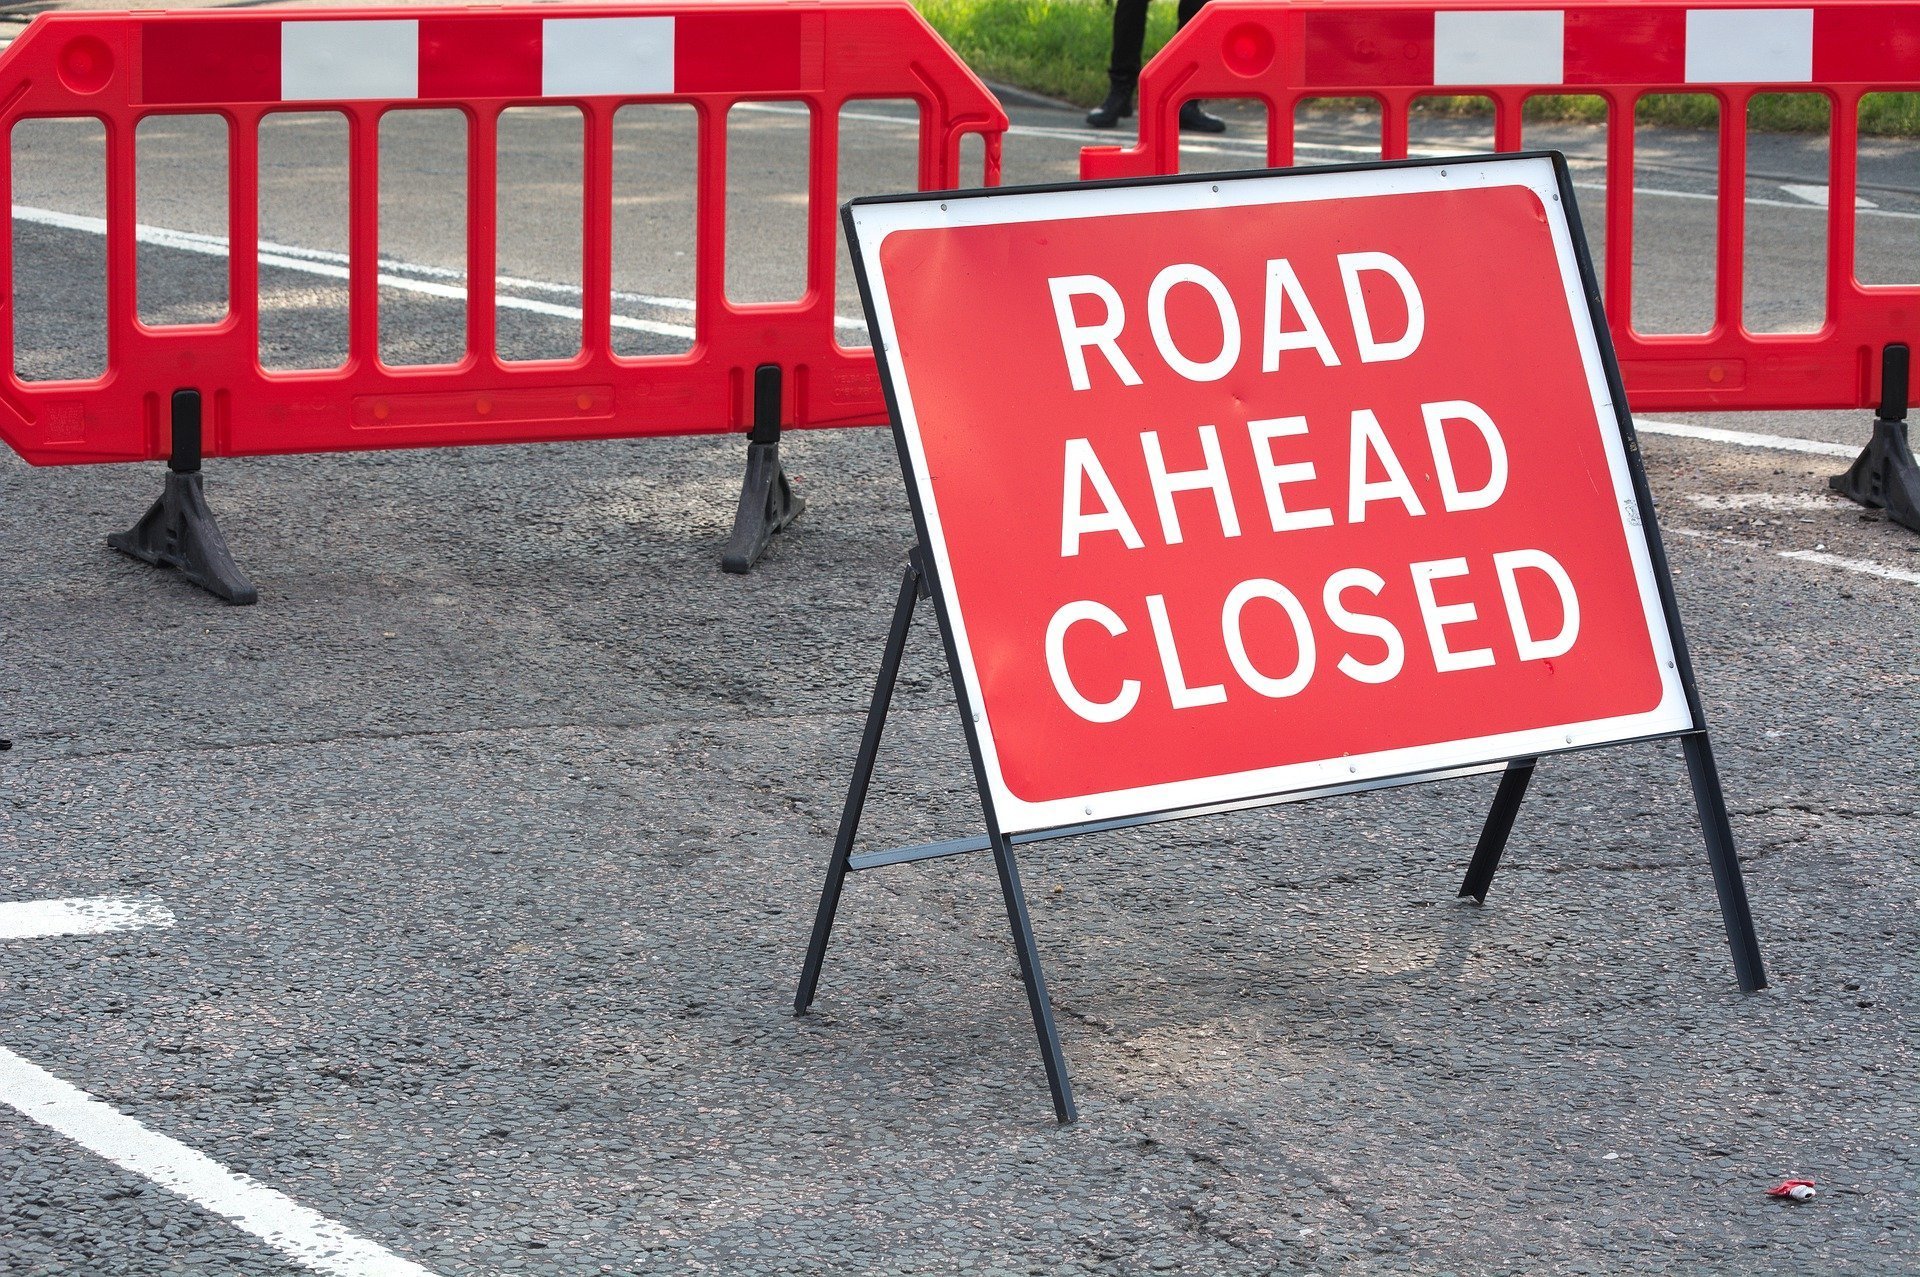 Stretch of Fermanagh road closed to facilitate roadworks